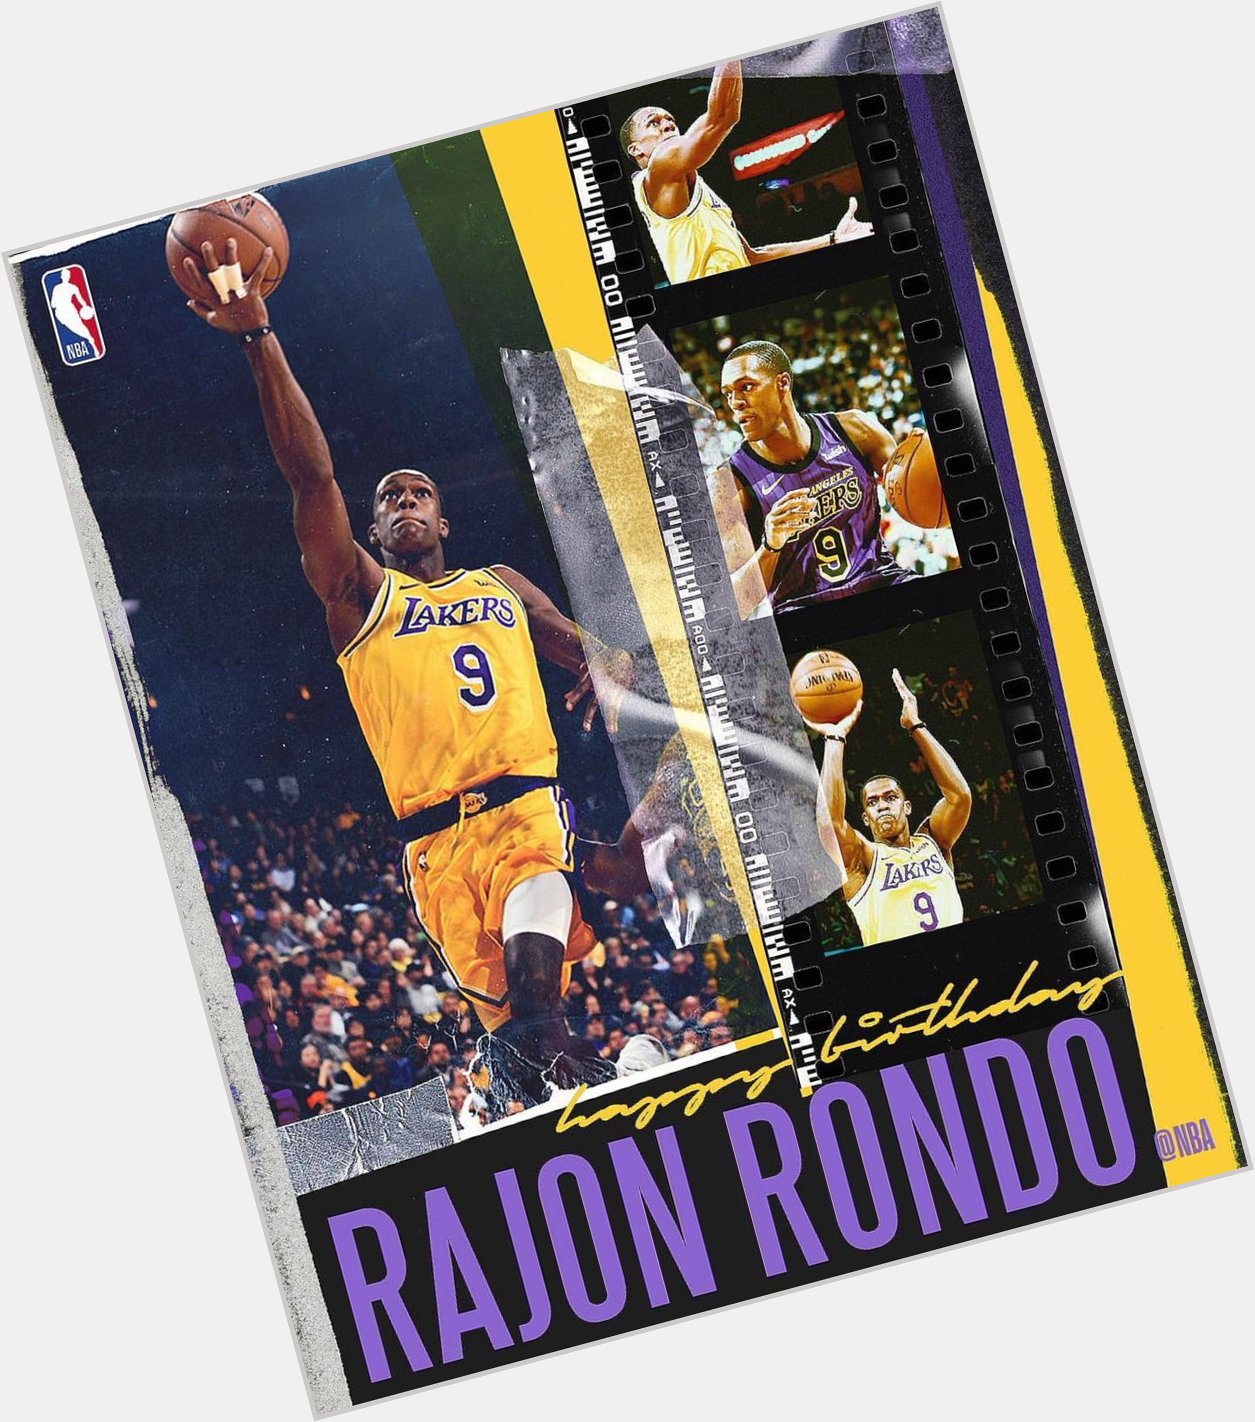 Happy Birthday to Rajon Rondo  